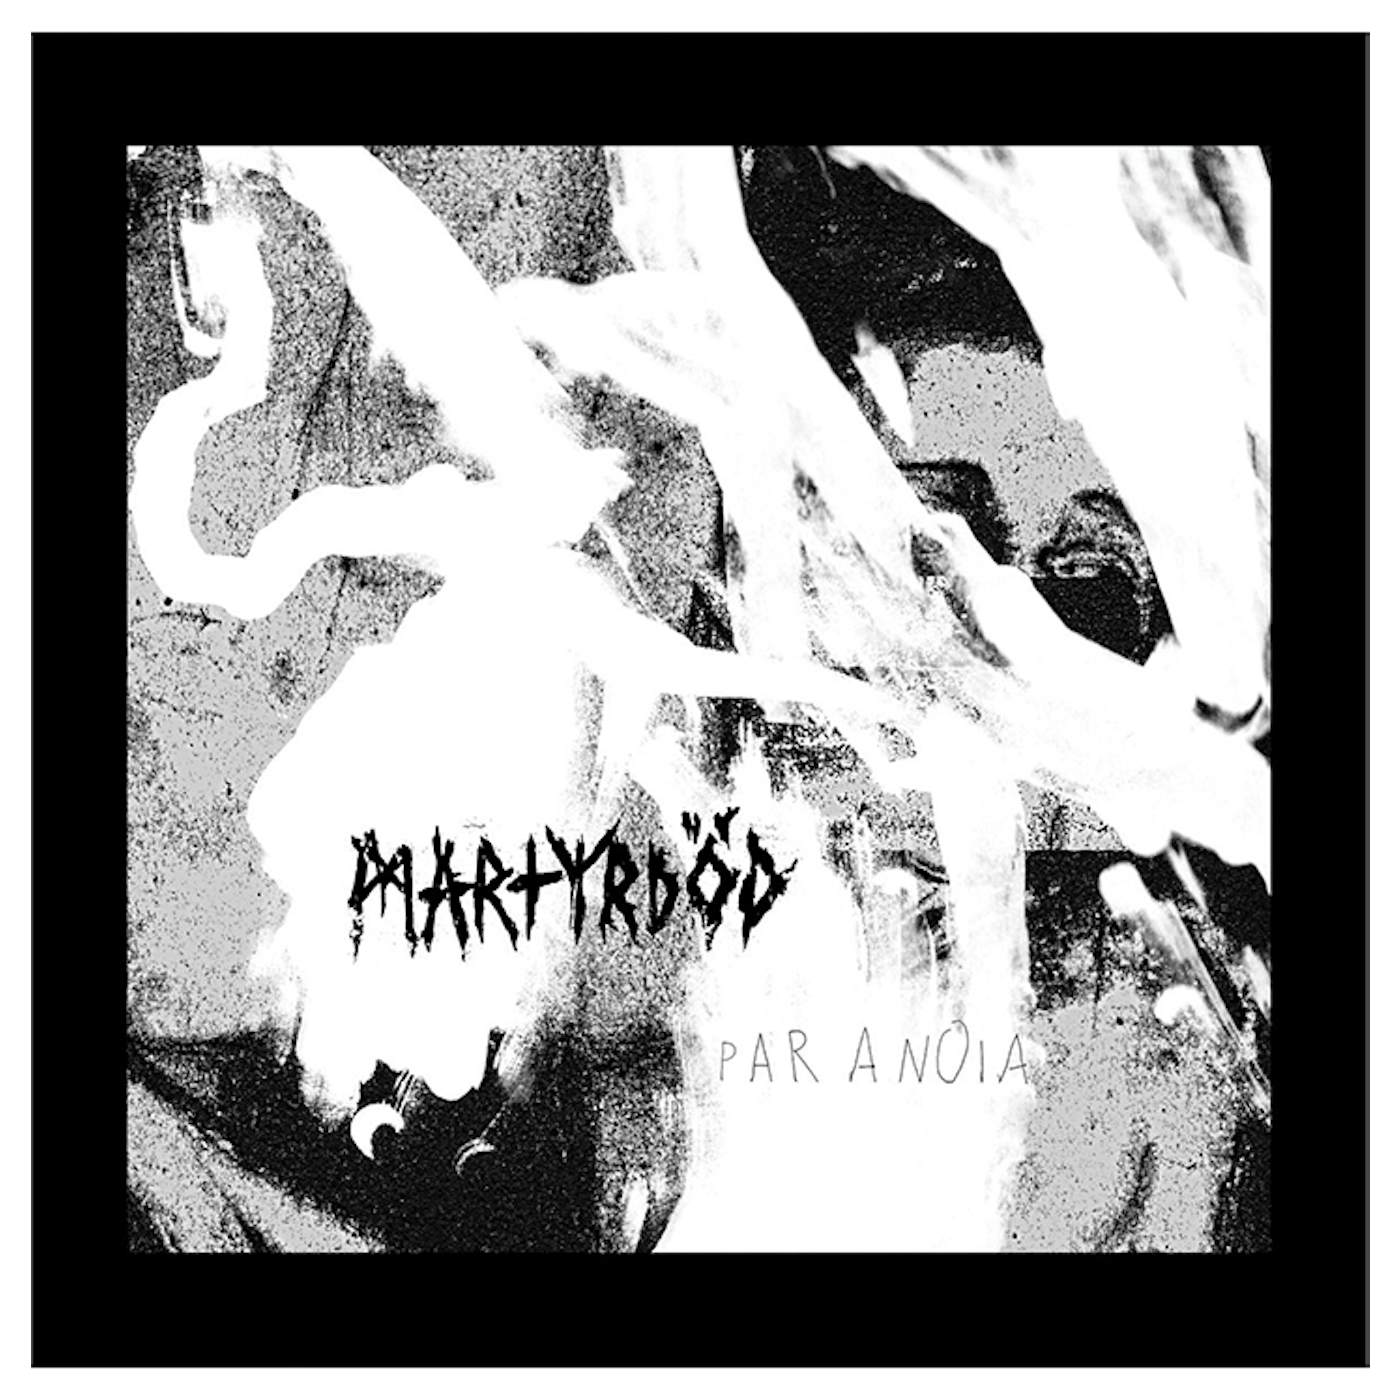 MARTYRDÖD - 'Paranoia' CD